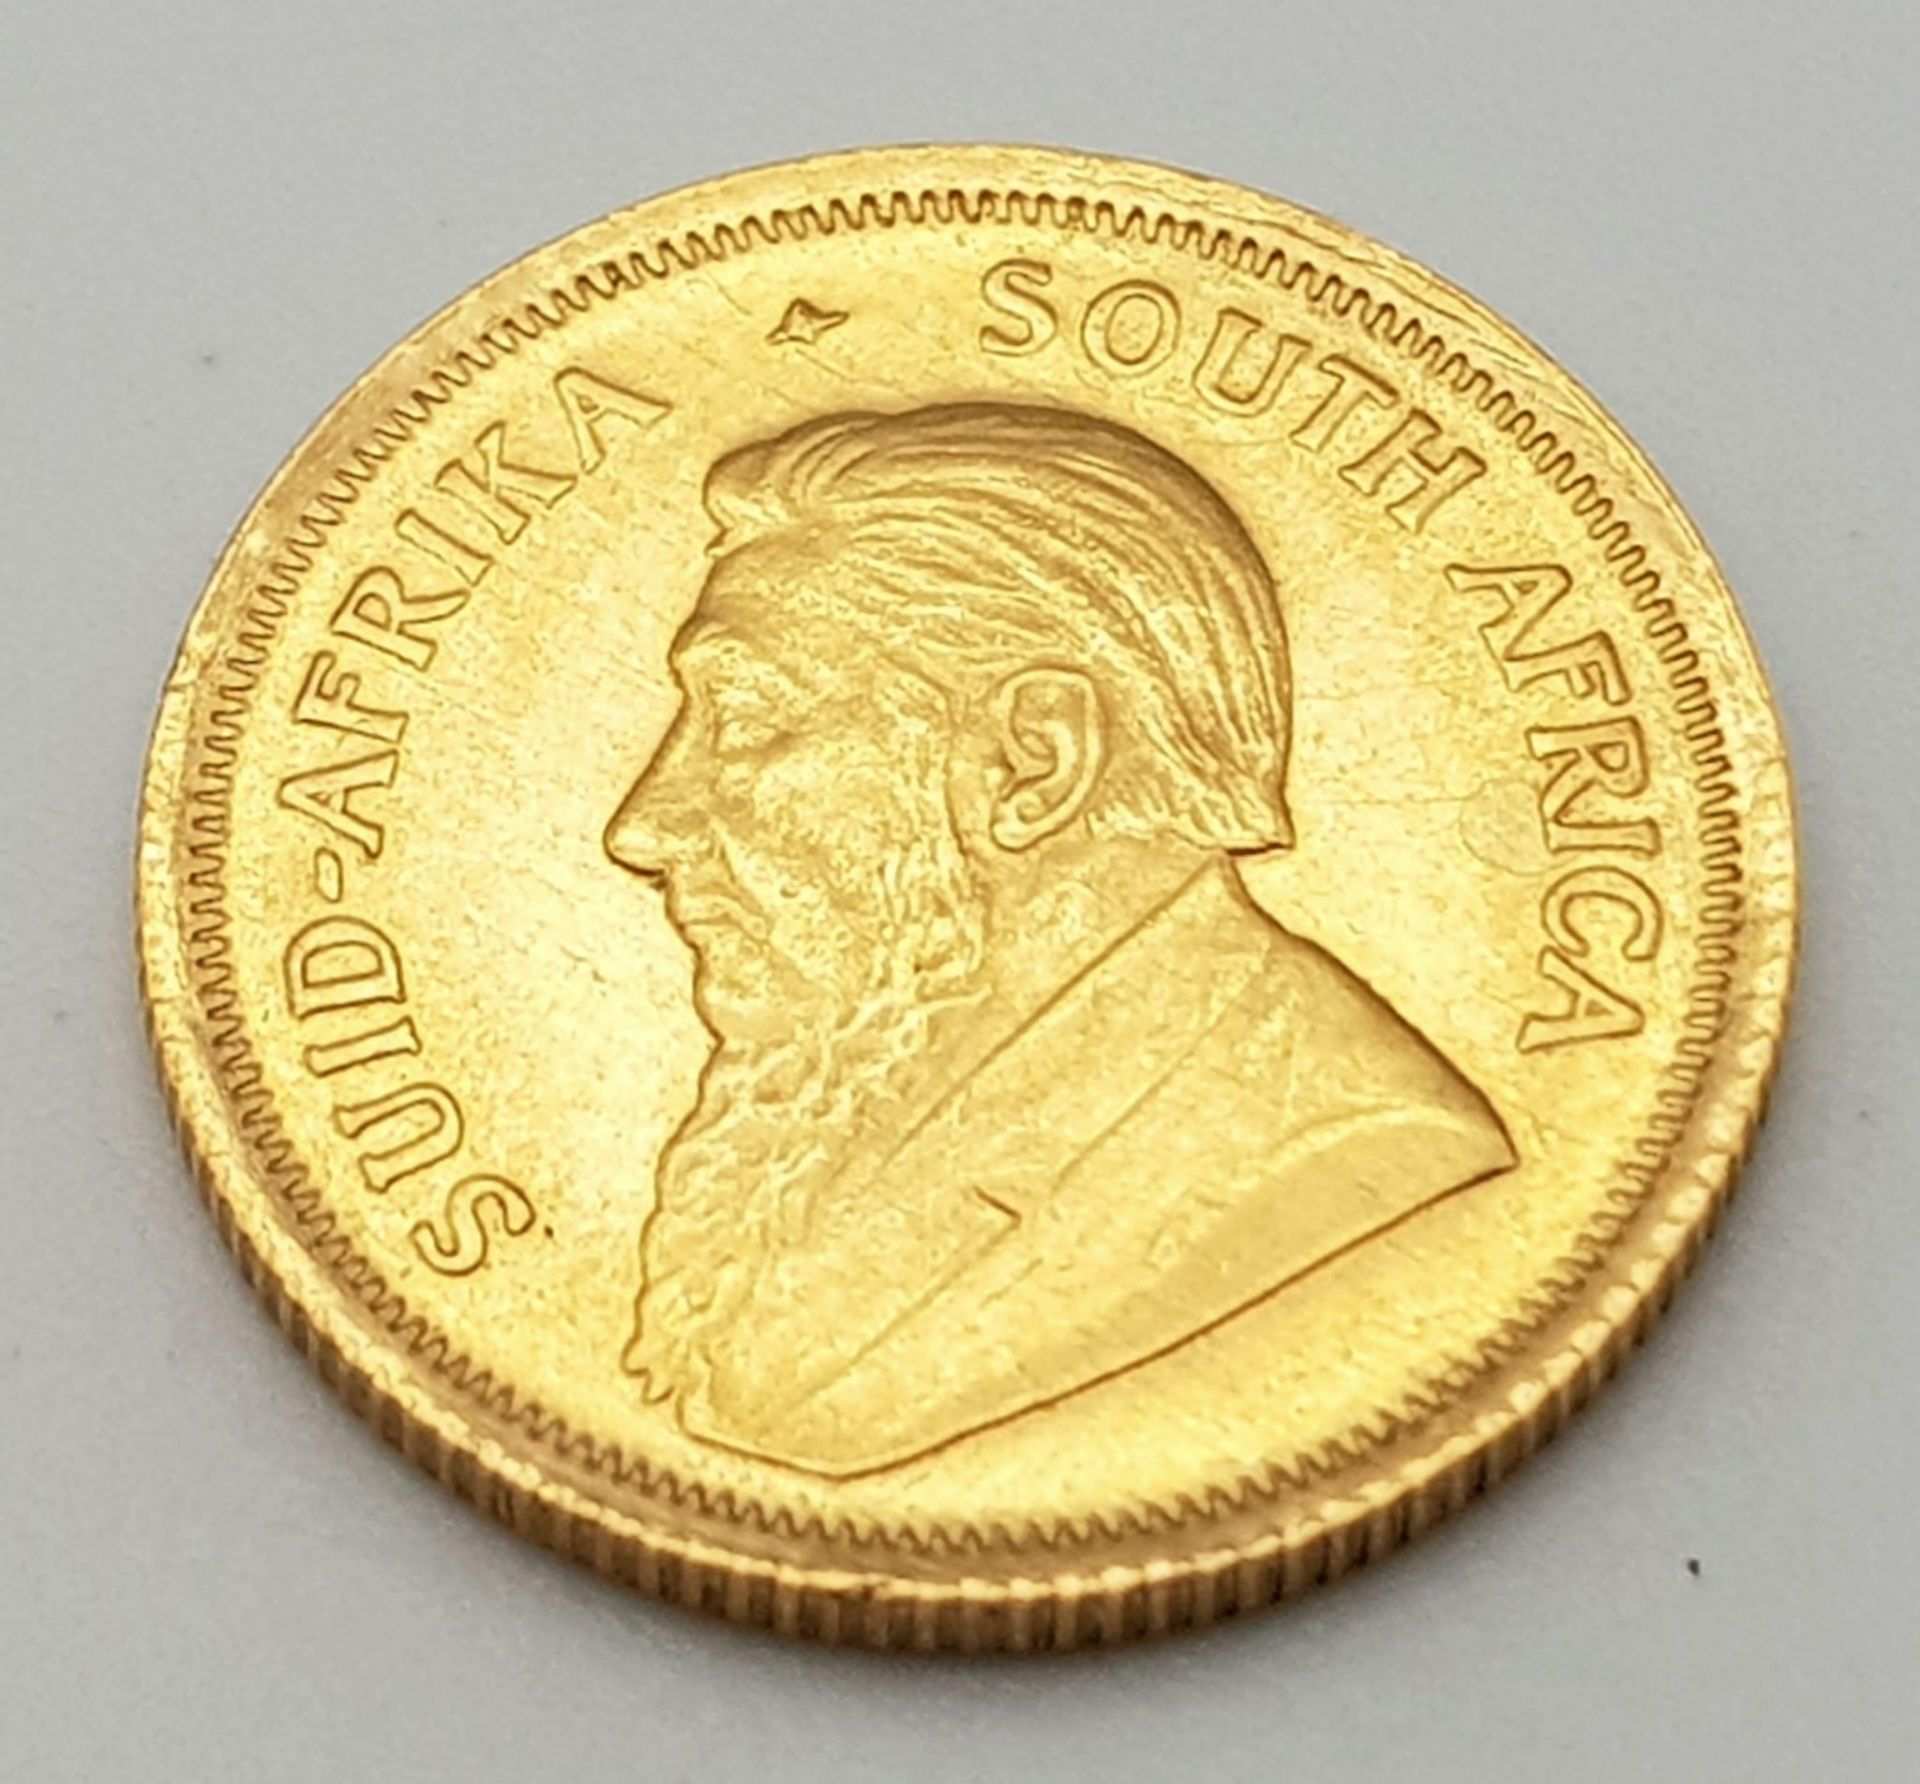 A 1/10 Ounce 22k Gold Krugerrand Coin.